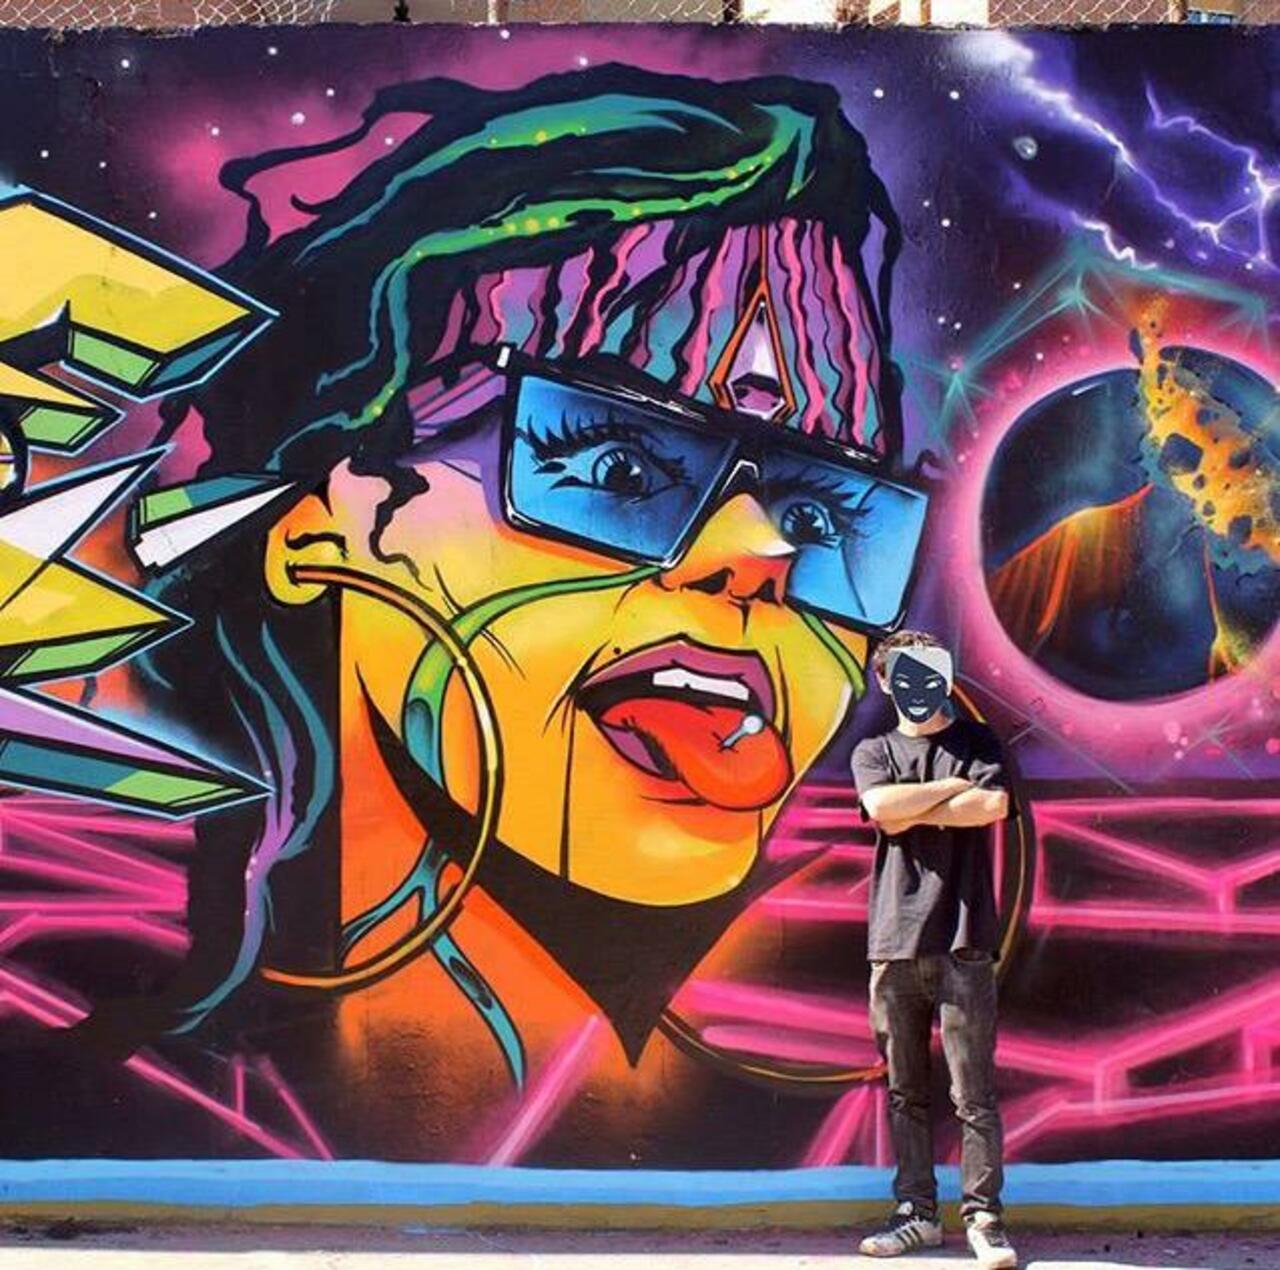 Brilliant new Street Art by the artist Jaycaes #art #graffiti #mural #streetart http://t.co/TiNYDNPlxf … http://twitter.com/charlesjackso14/status/649560756262969346